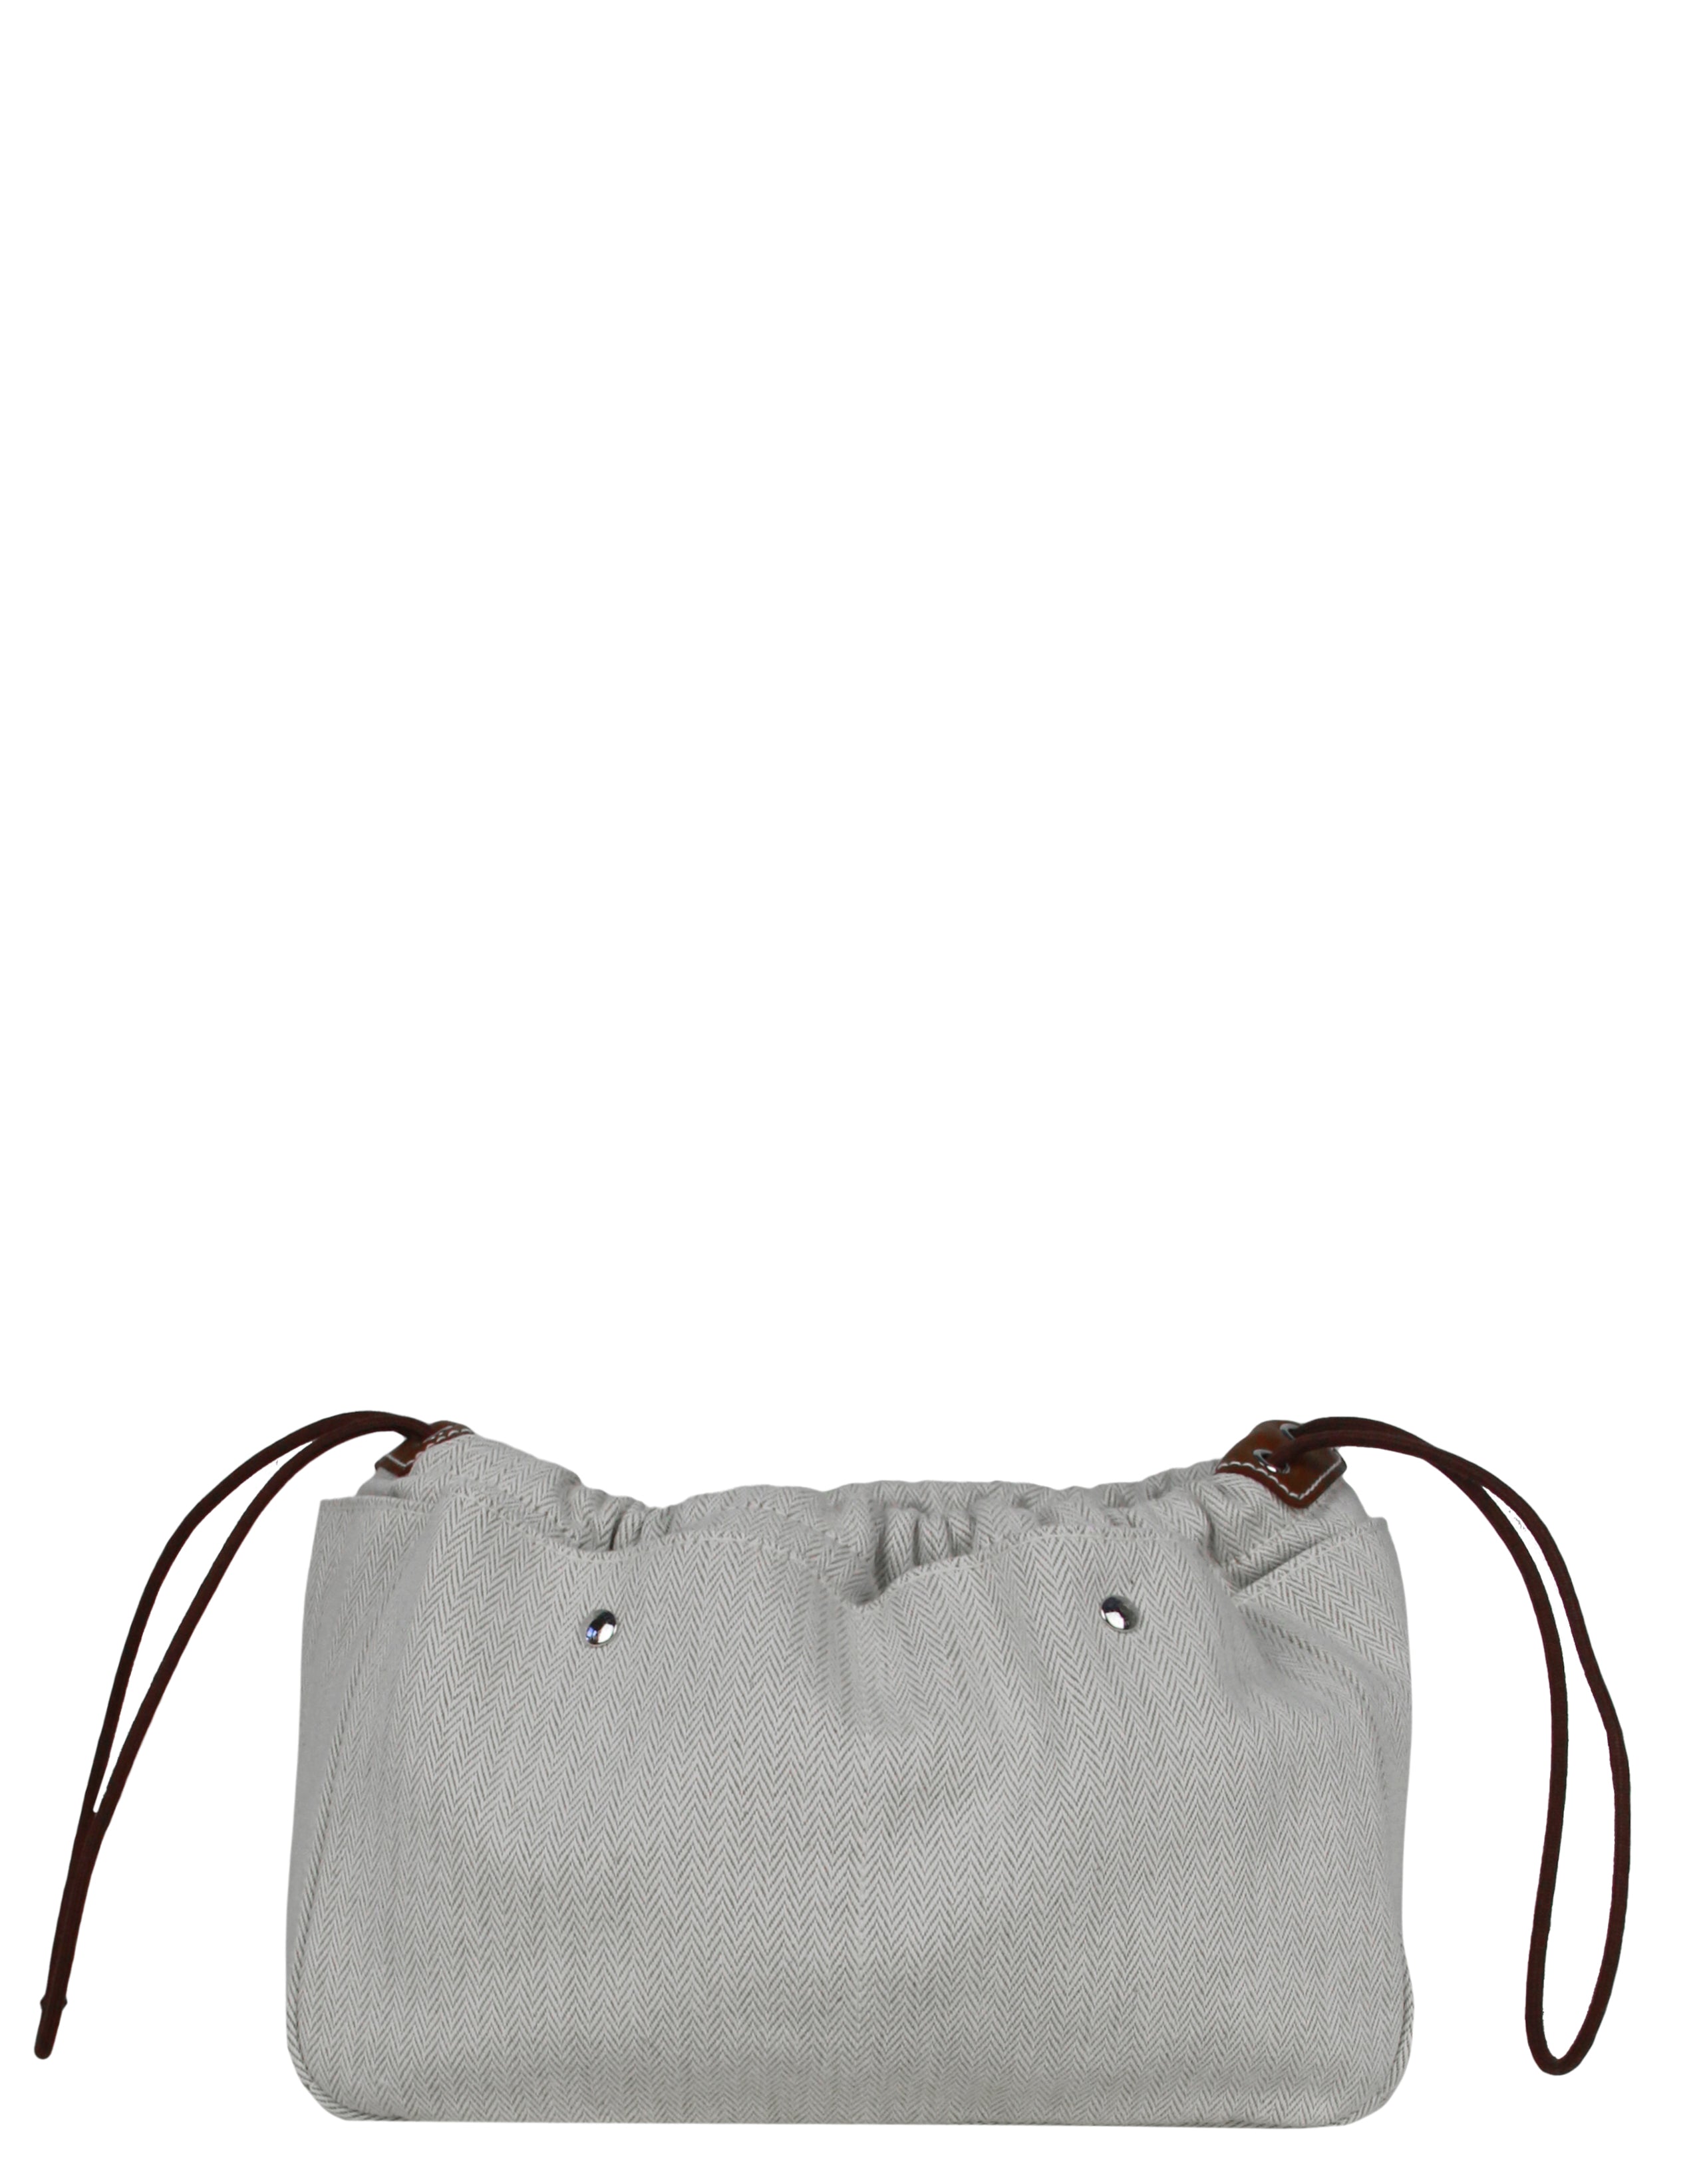 Hermes 25cm Natural Barenia Leather Birkin Bag with